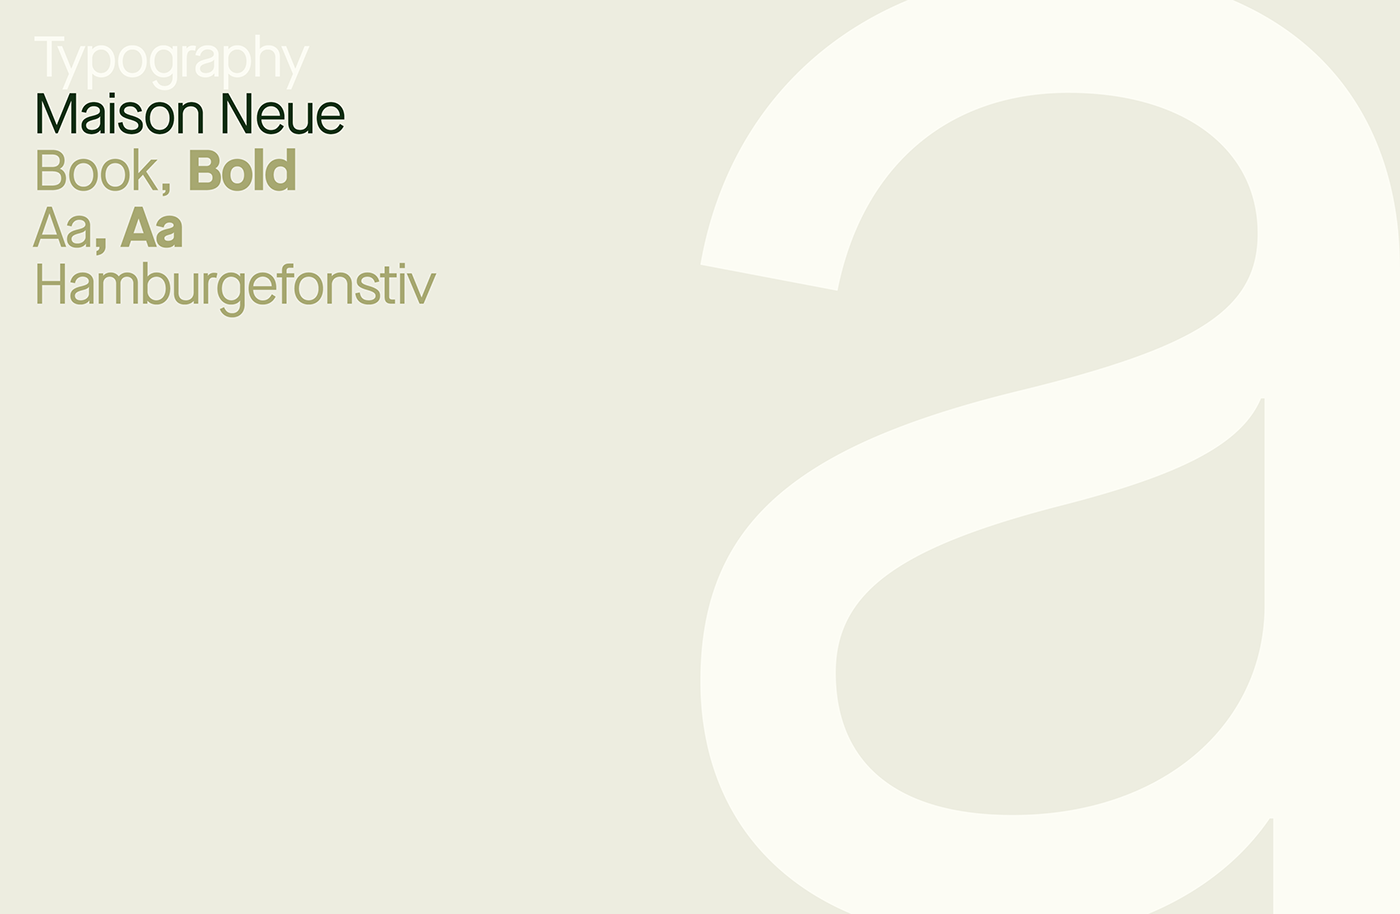 branding  colors financing finland Investment Logotype Nature visual identity worldwide